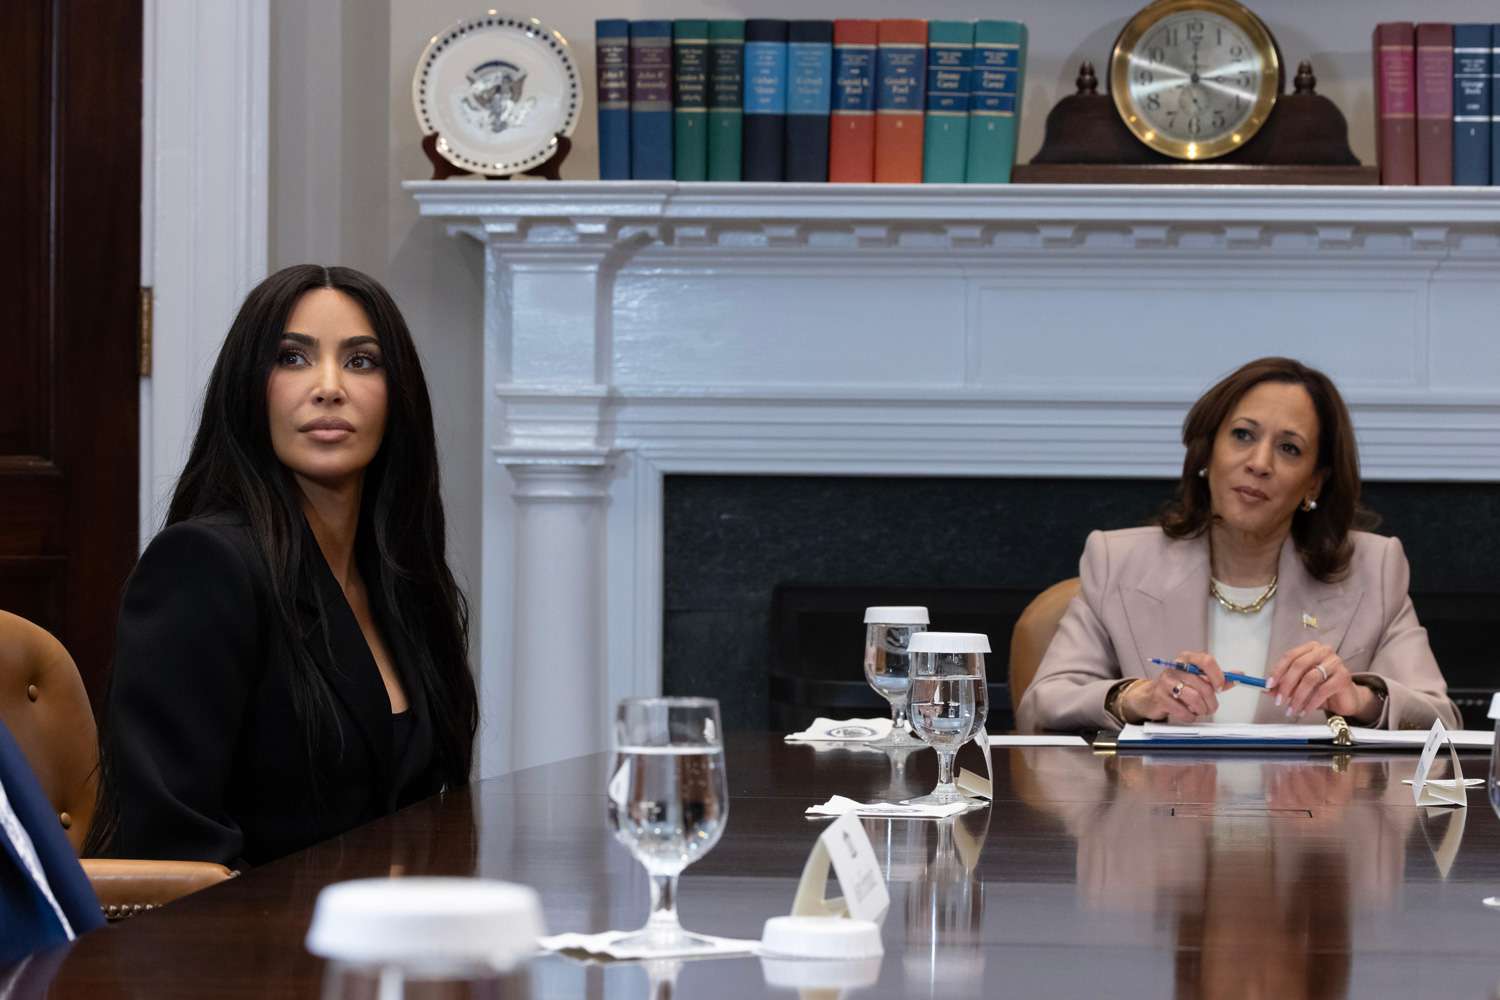 Kim Kardashian Returns to the White House to Discuss Criminal Justice Reform [Video]